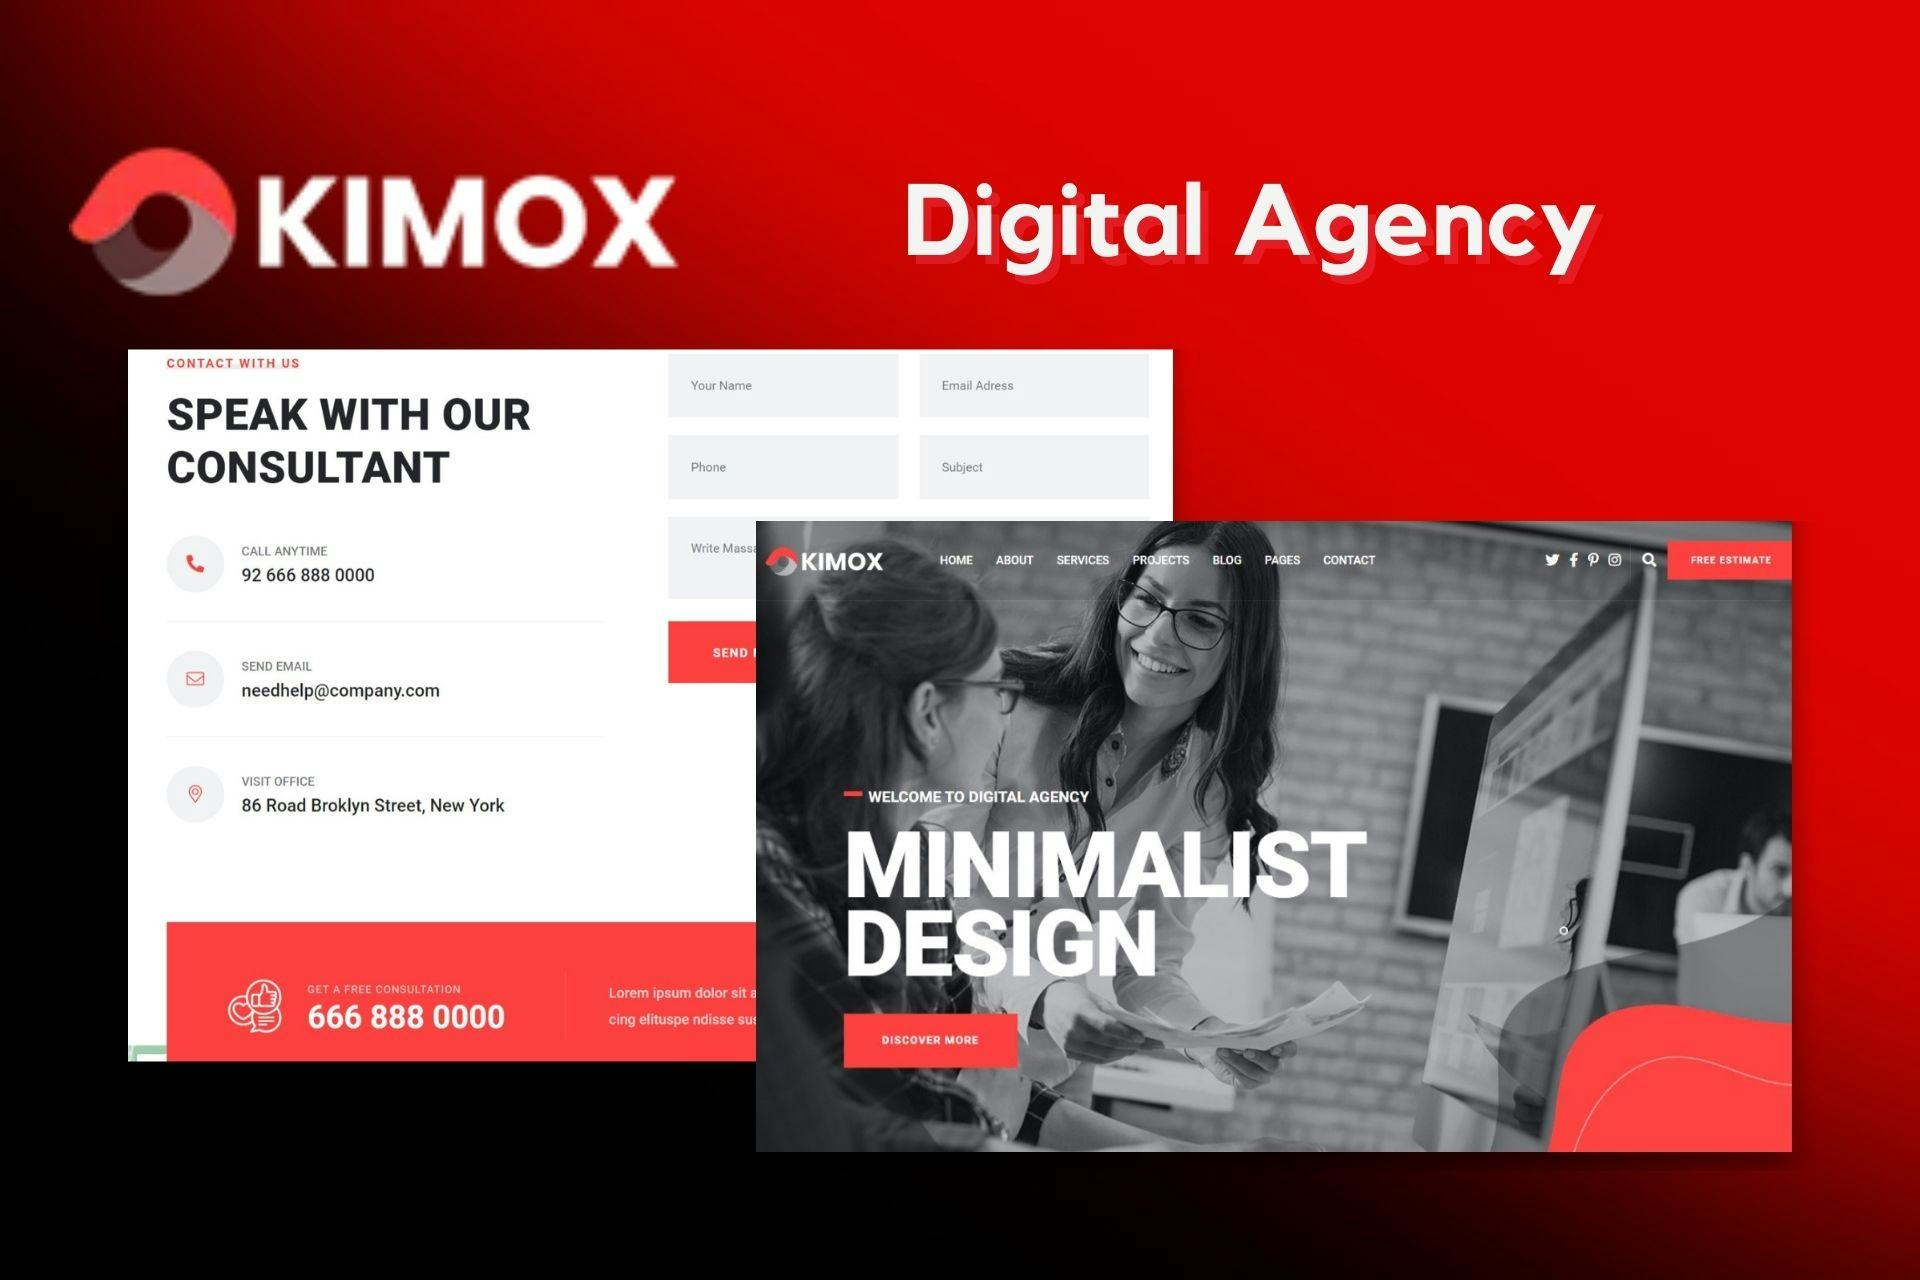 Kimox - Digital Agency image